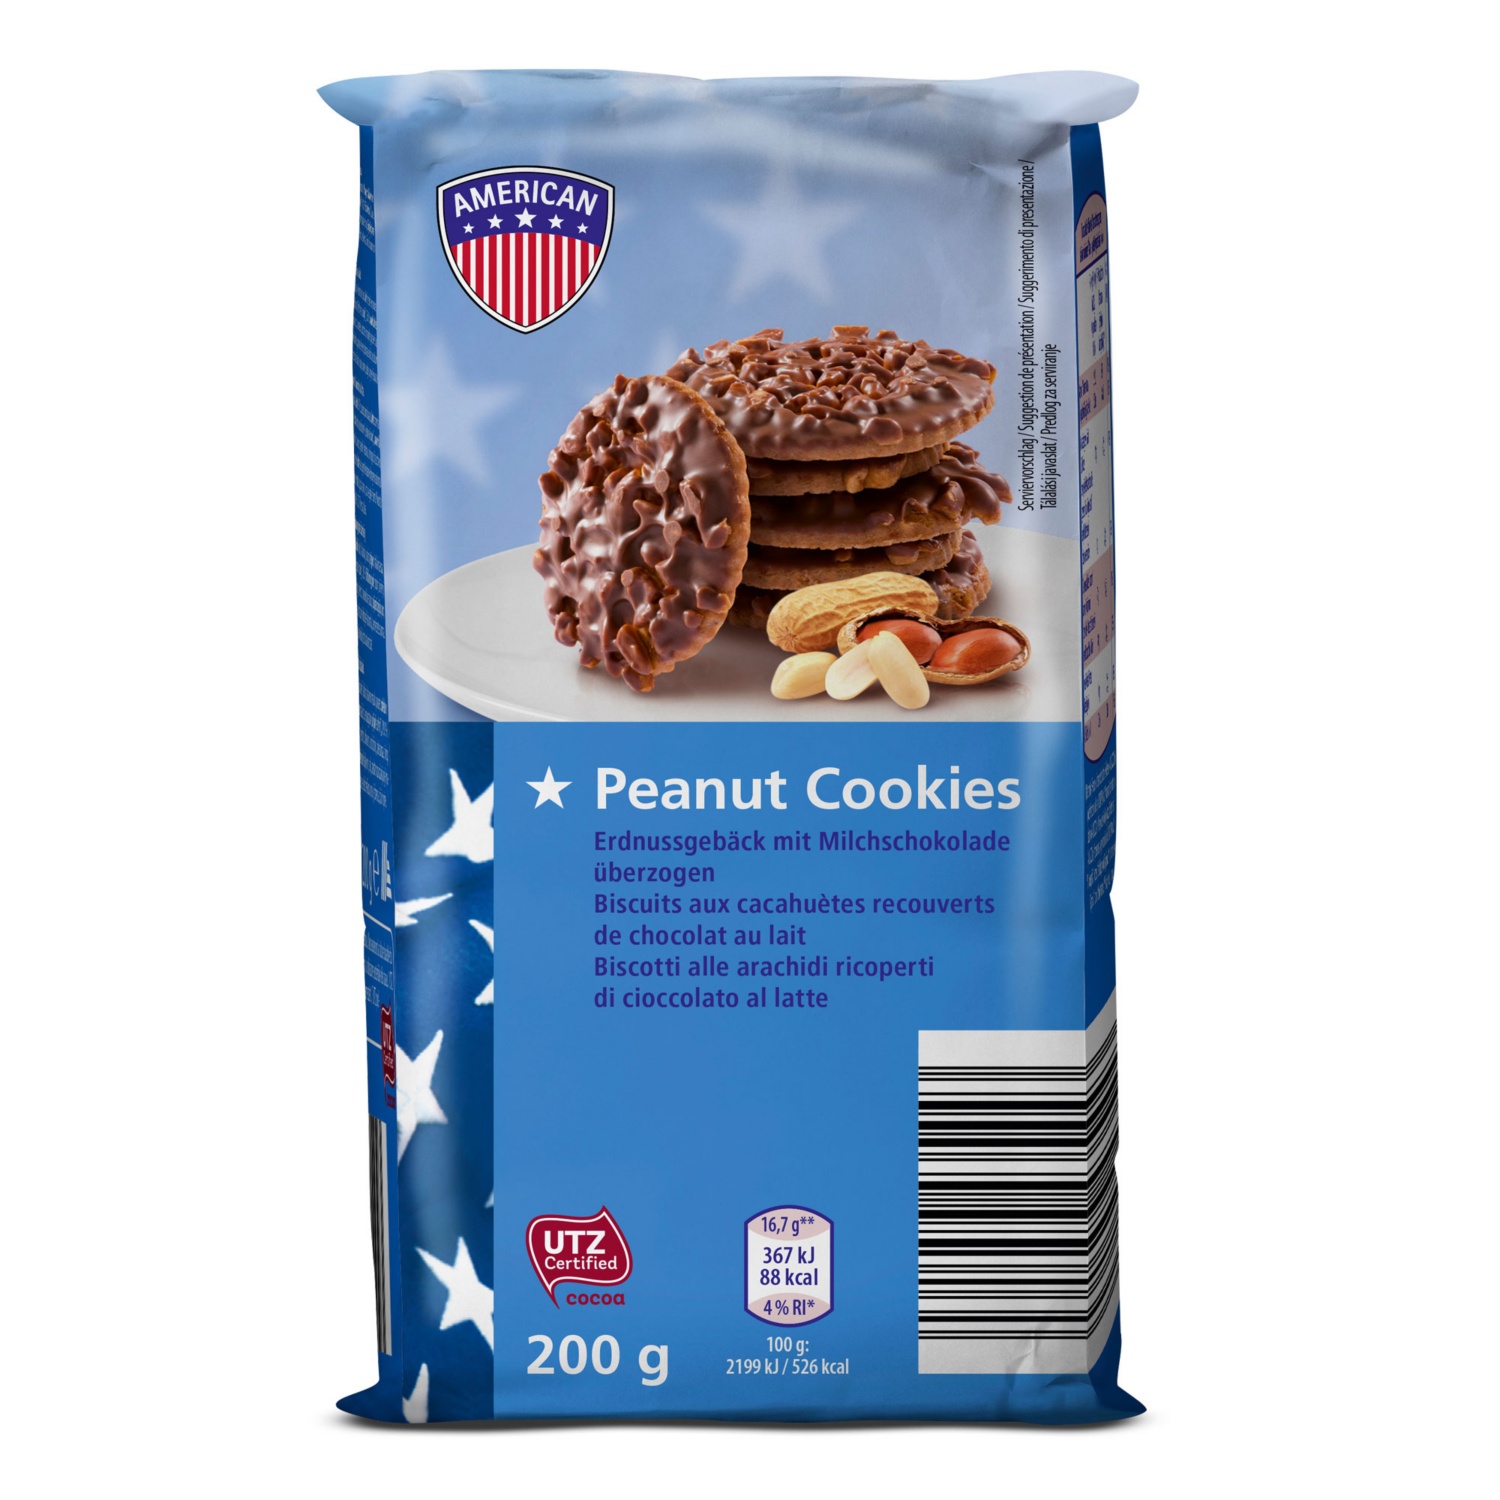 AMERICAN Peanut Cookies, Milchschokolade